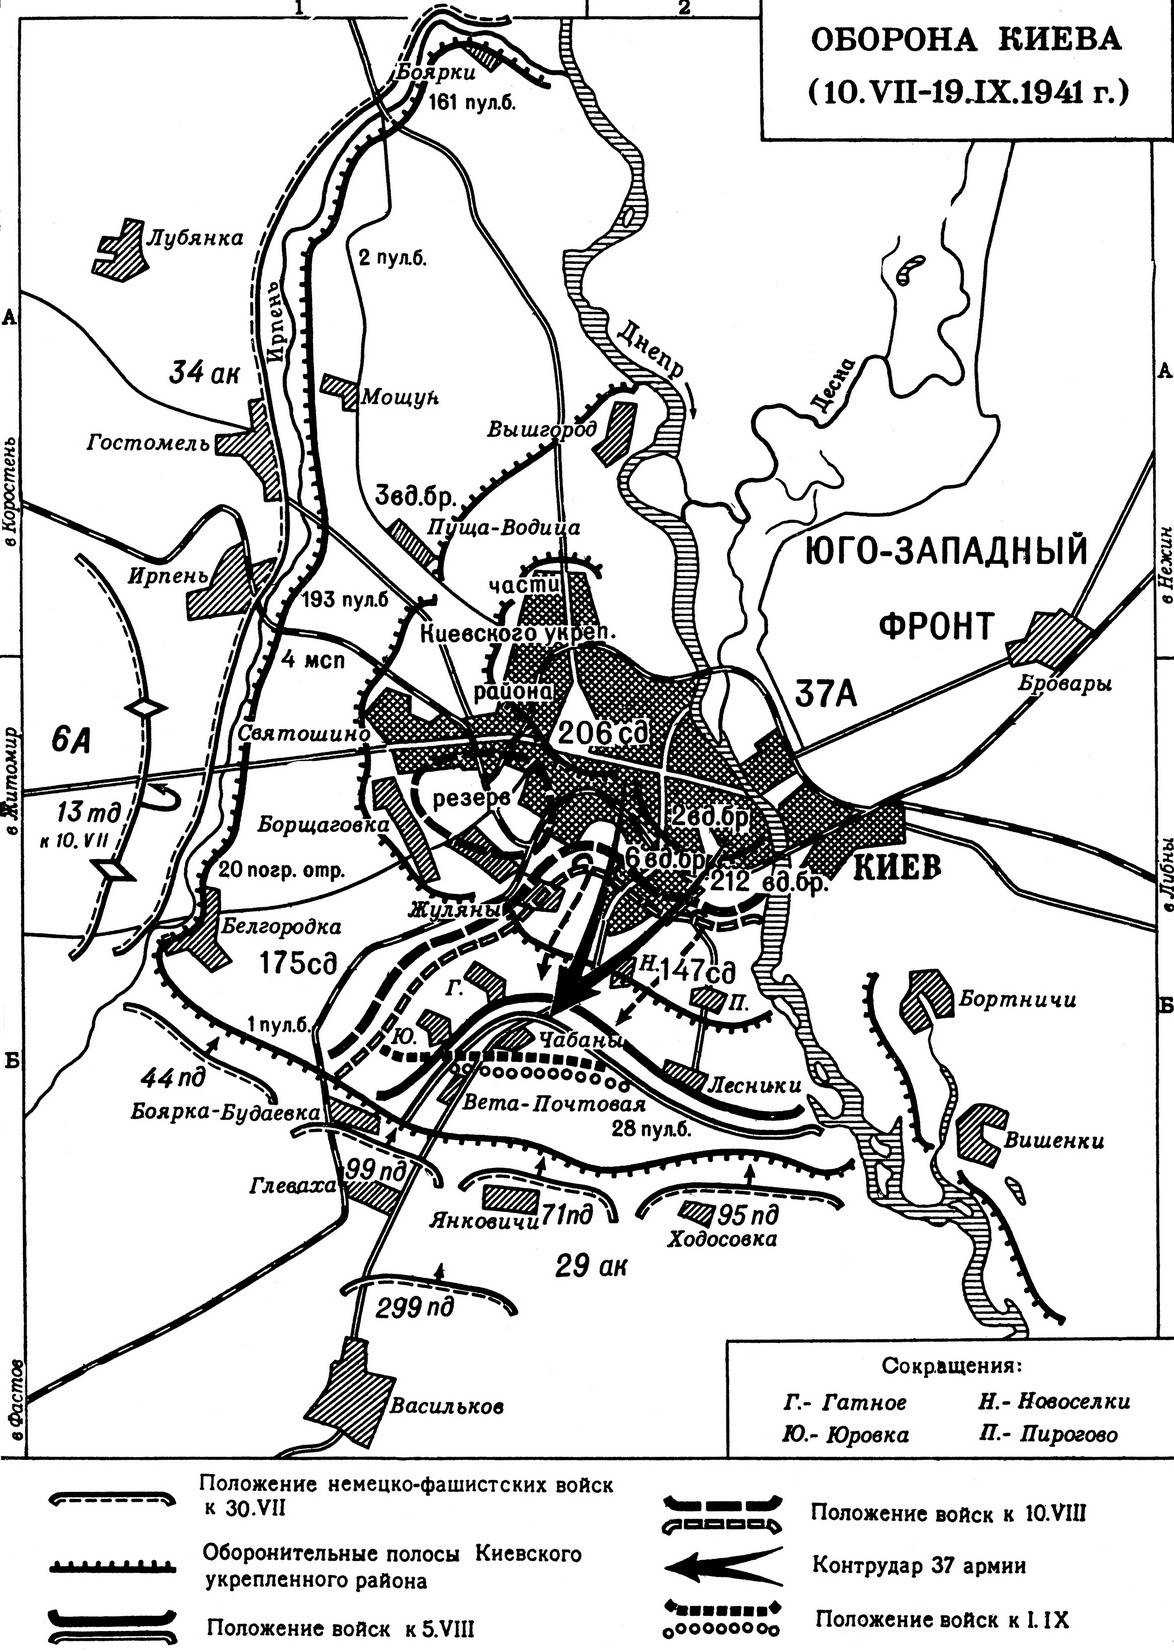 Карта обороны Киева (10.07-19.09.1941 г.) Фото: dic.academic.ru